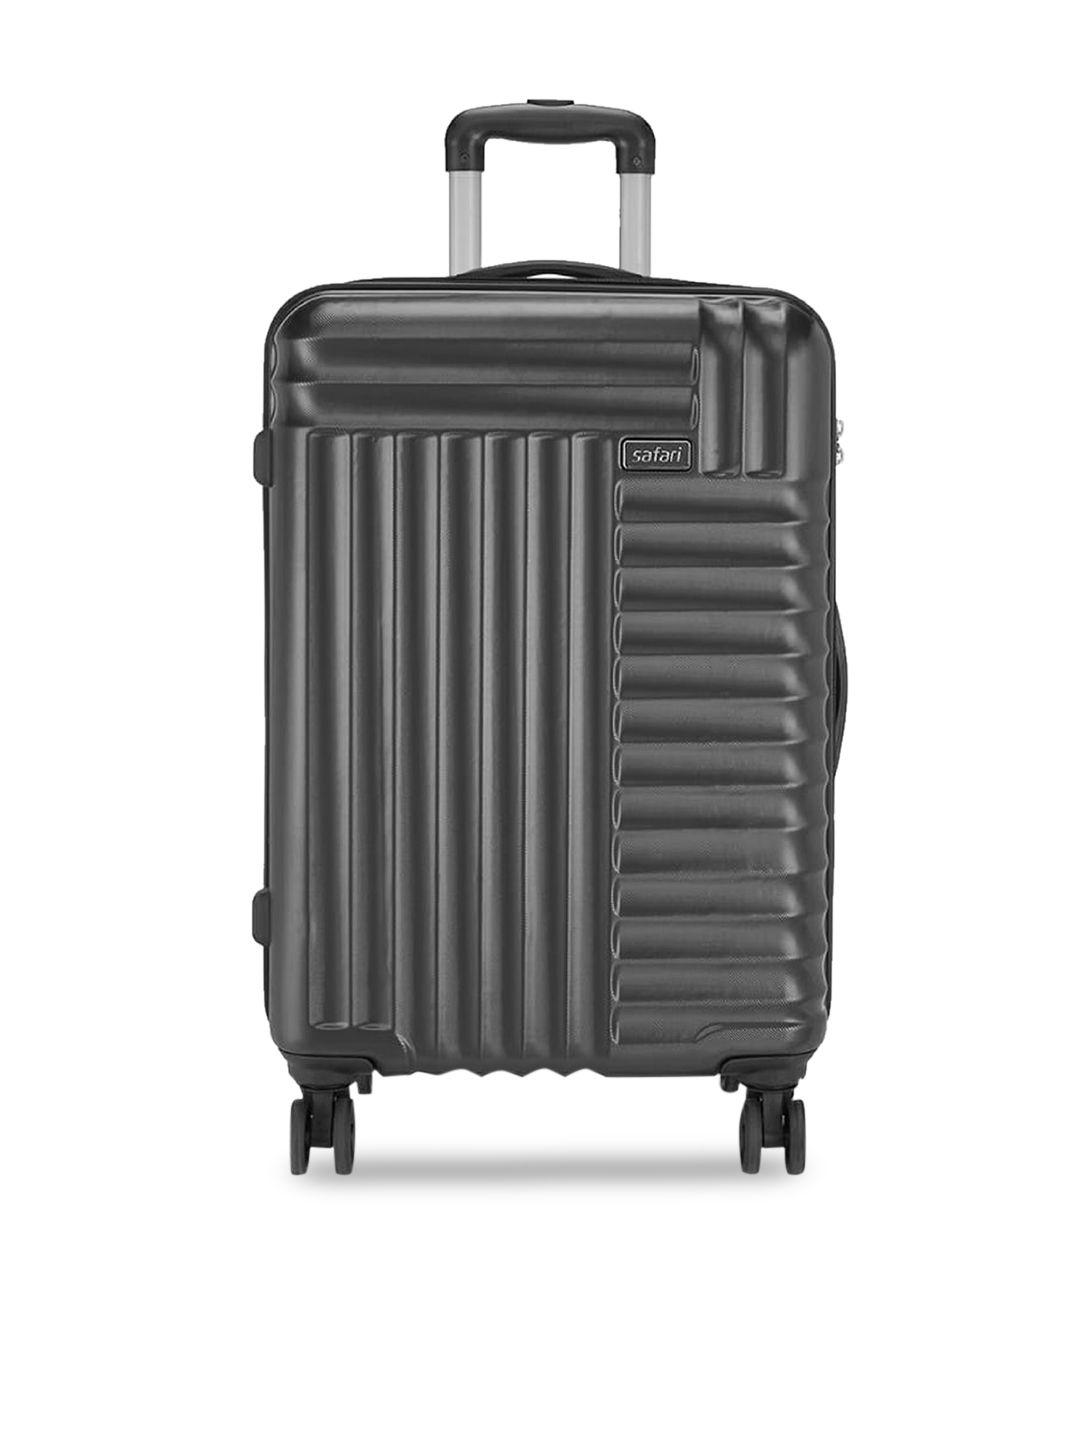 safari grey textured hard-sided large trolley suitcase